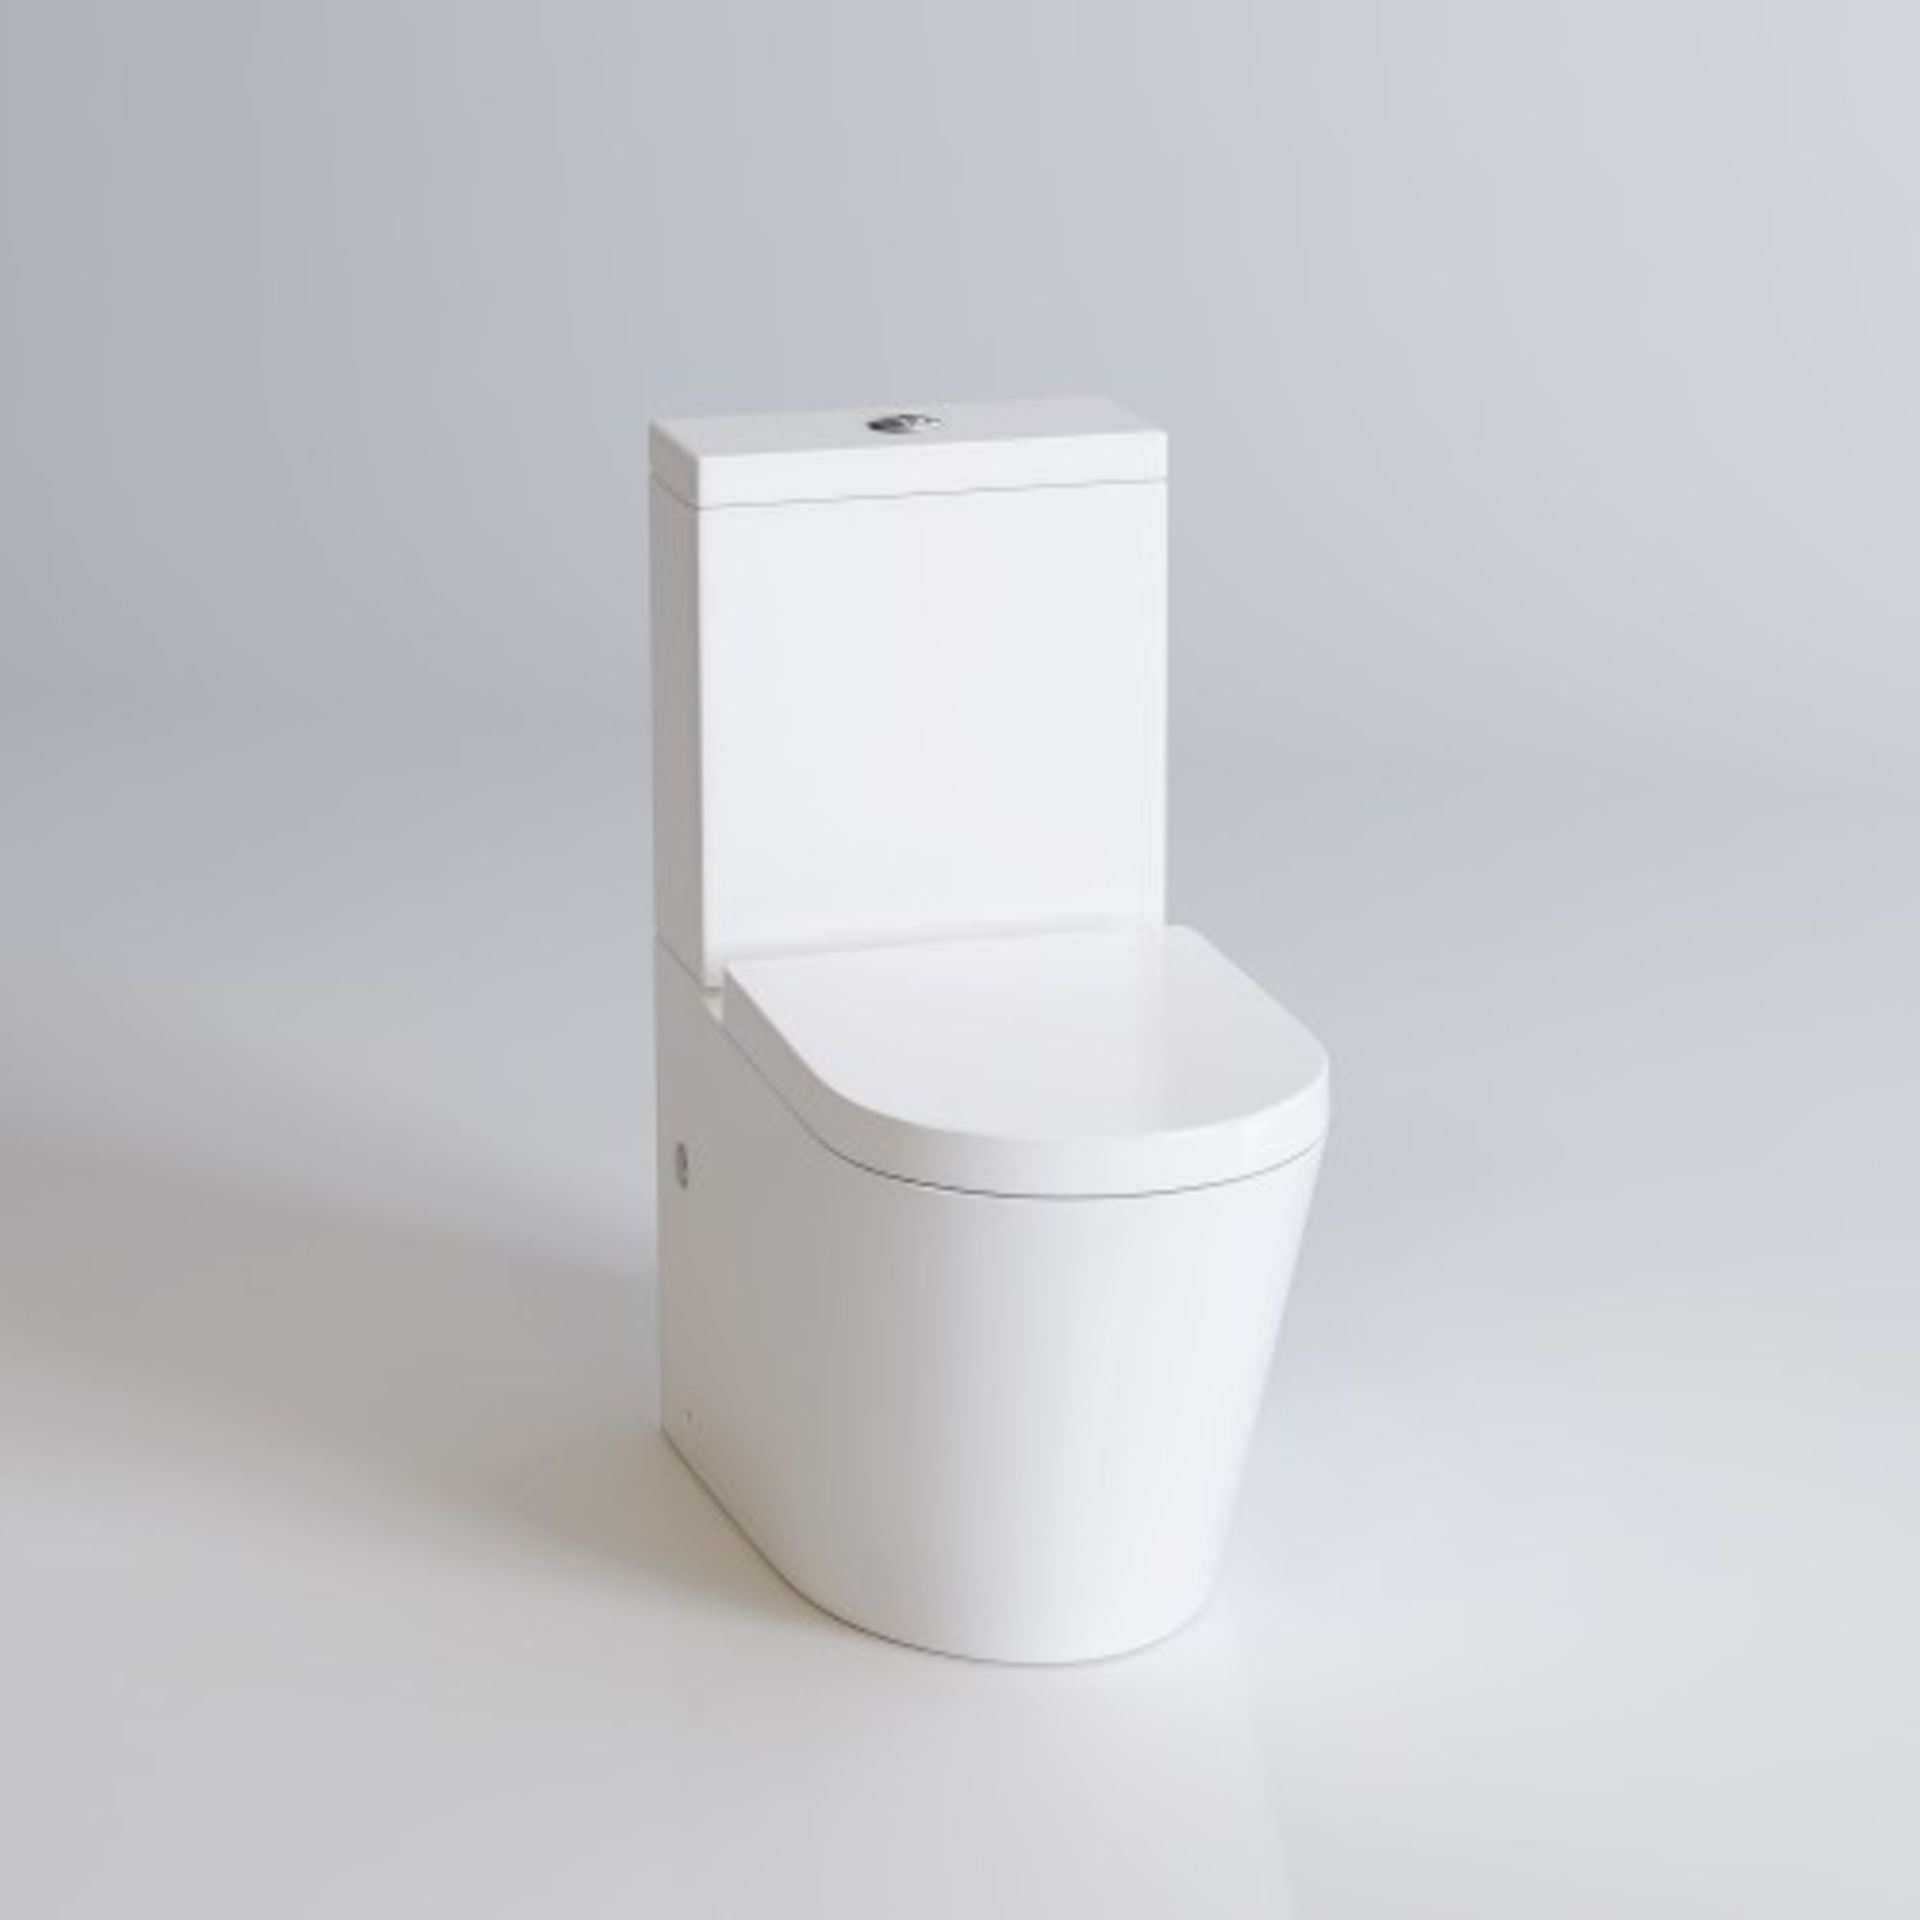 NEW Lyon II Close Coupled Toilet & Cistern inc Luxury Soft Close Seat. RRP £599.99 - Image 2 of 2